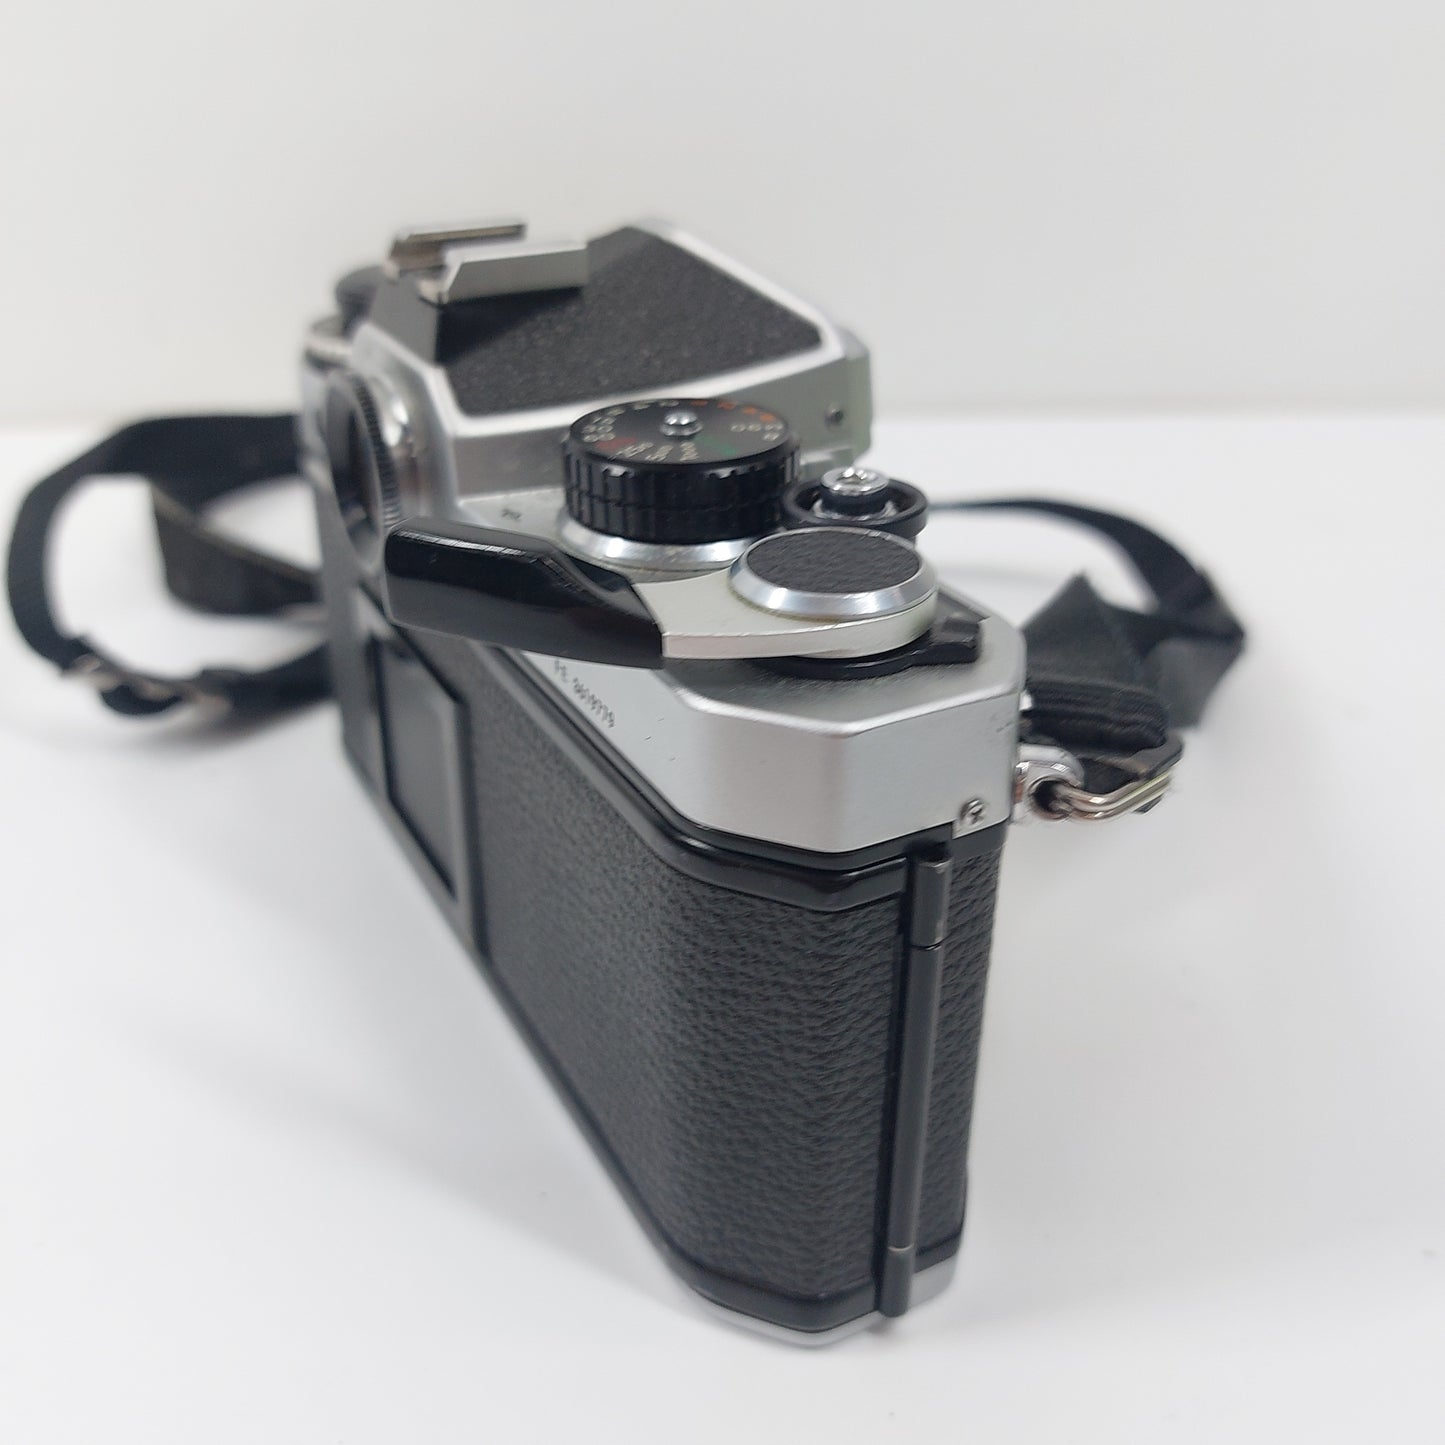 Nikon FE SLR Film Camera Body Only